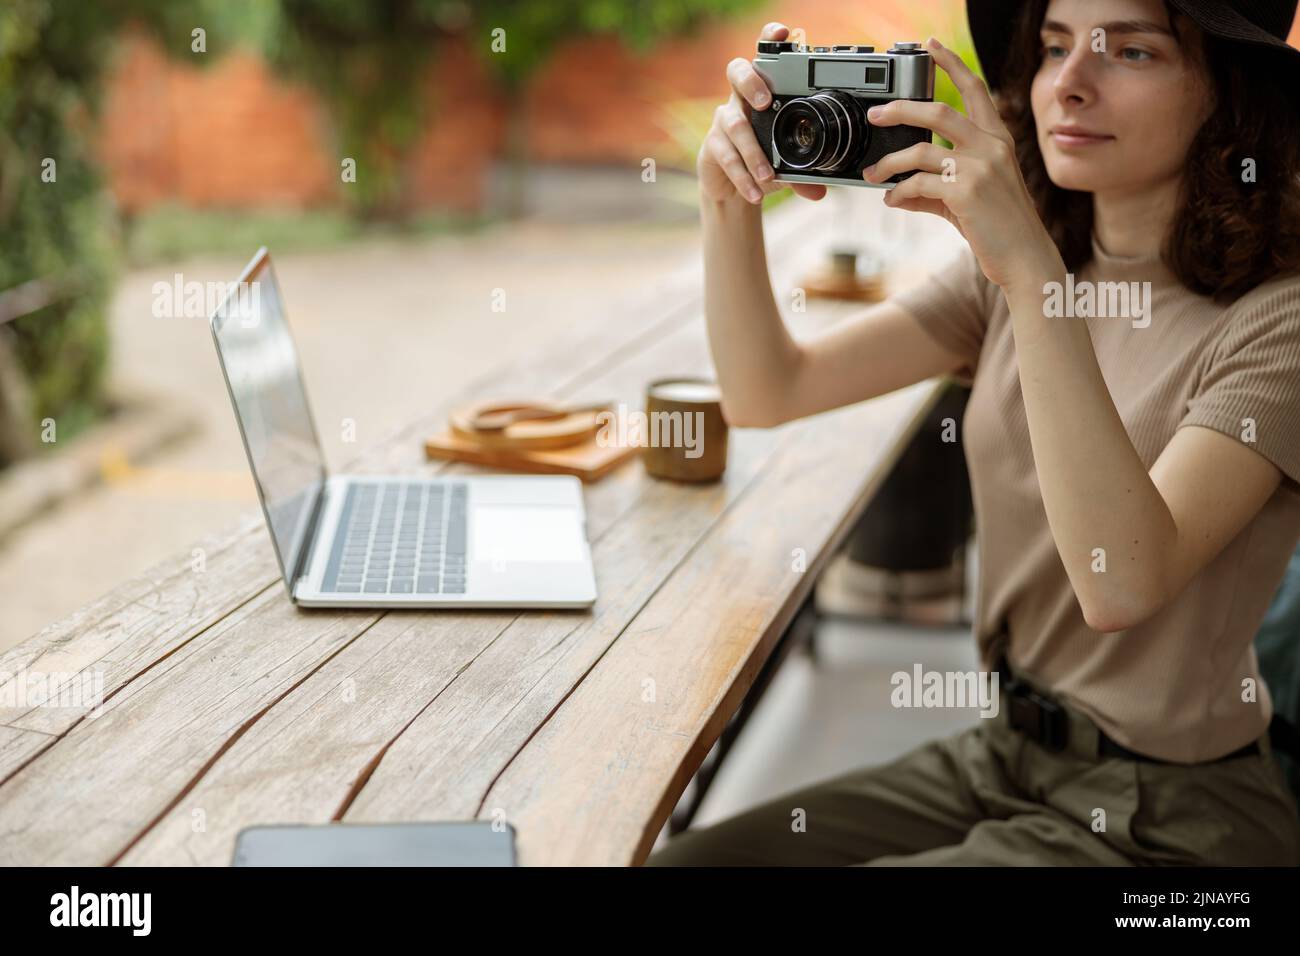 Smiling female traveler using photo camera while sitting in cafe outdoors Stock Photo